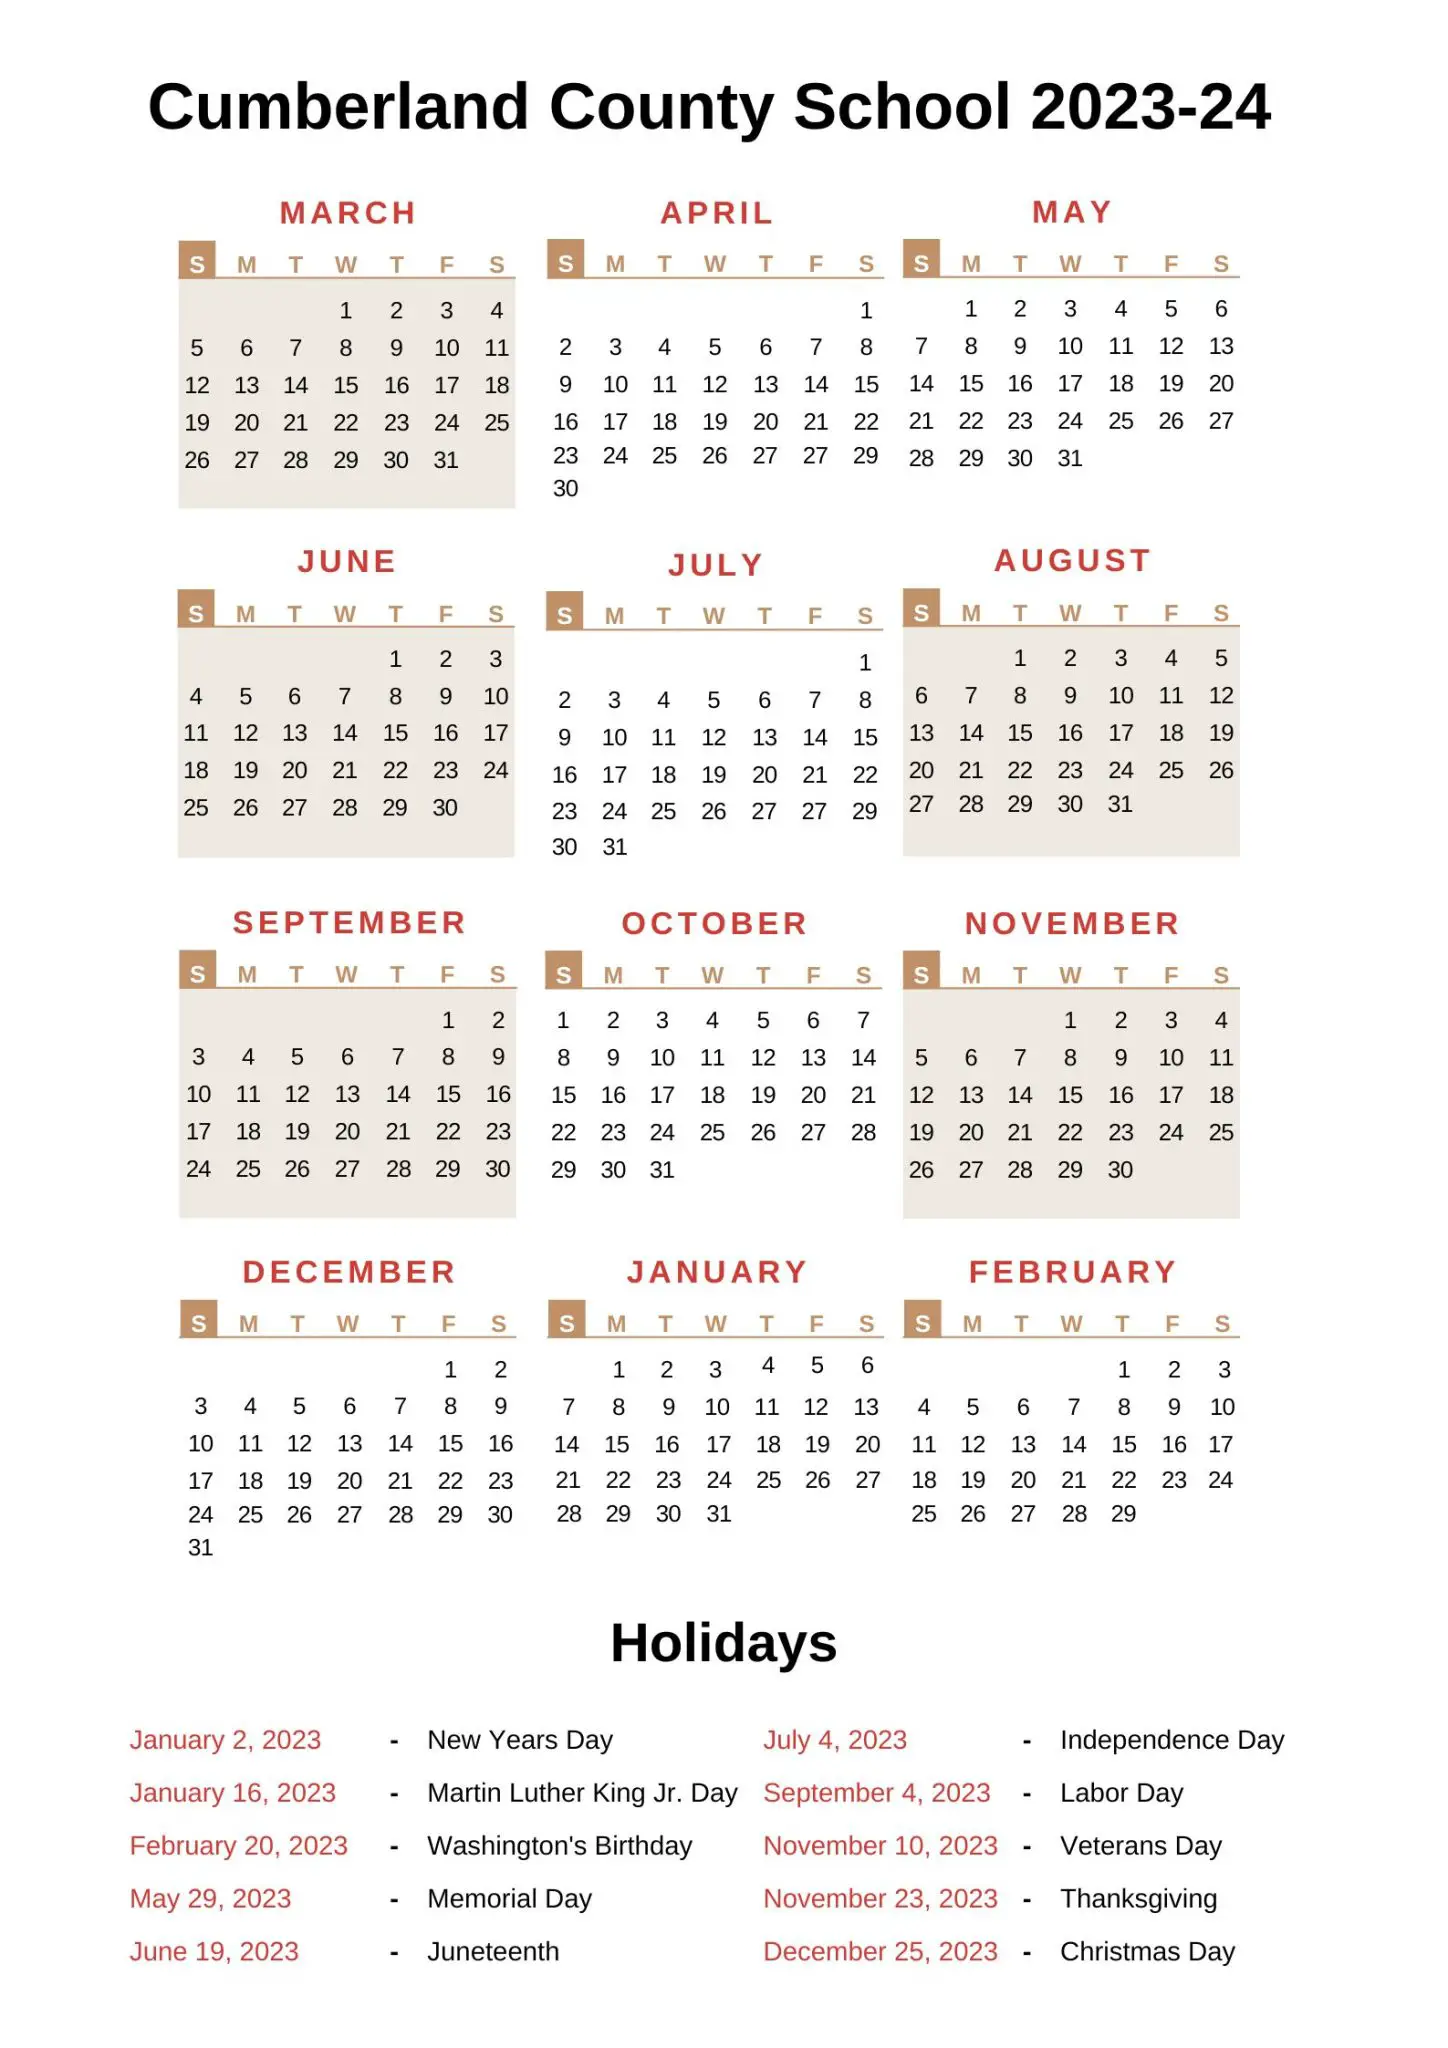 cumberland-county-schools-calendar-2023-24-with-holidays